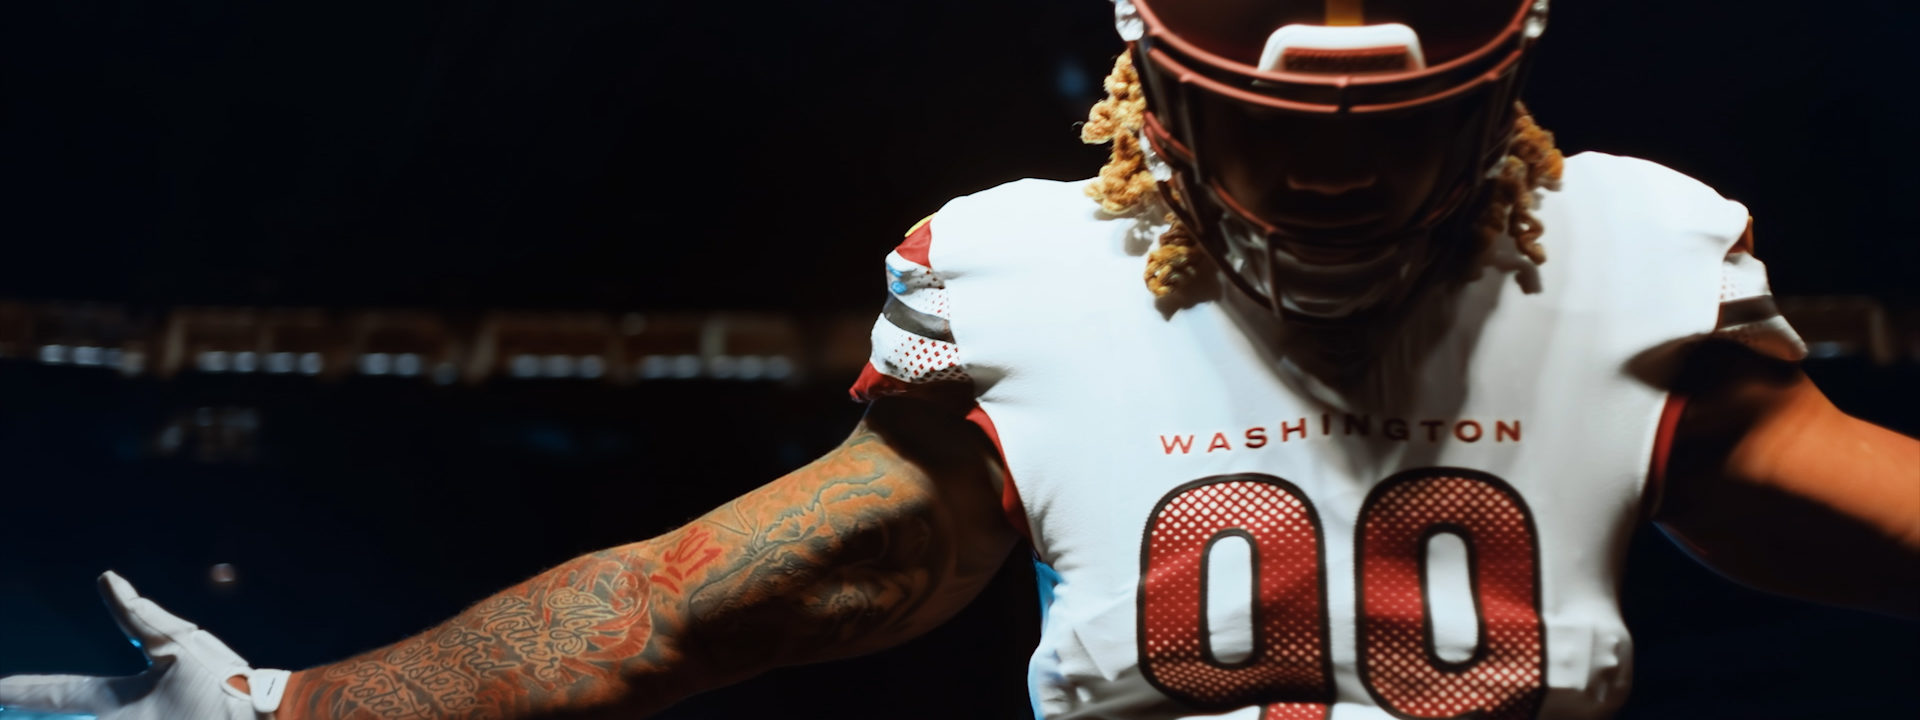 Washington Redskins rebrand to Washington Commanders with new visual  identity